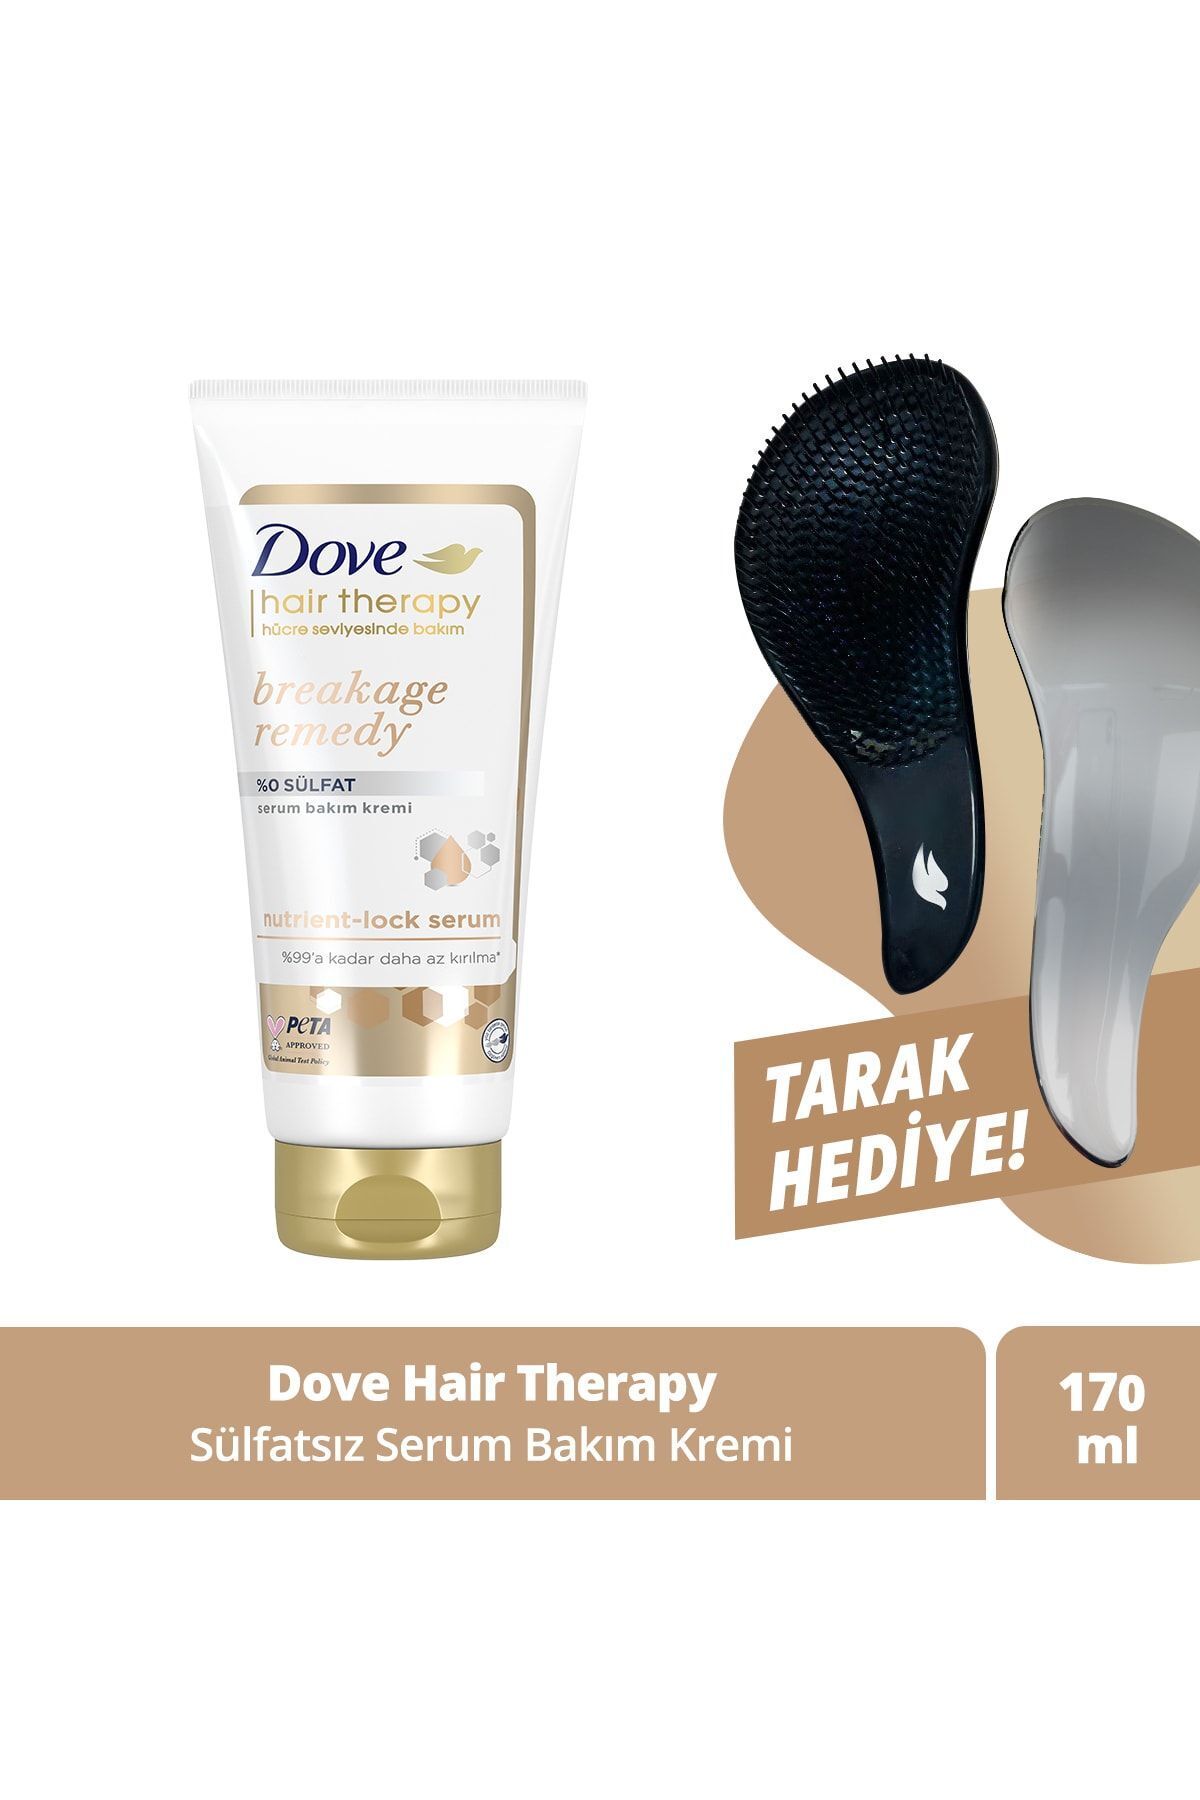 Dove Hair Therapy Serum Saç Bakım Kremi Breakage Remedy %0 Sülfat 170 ml Tarak